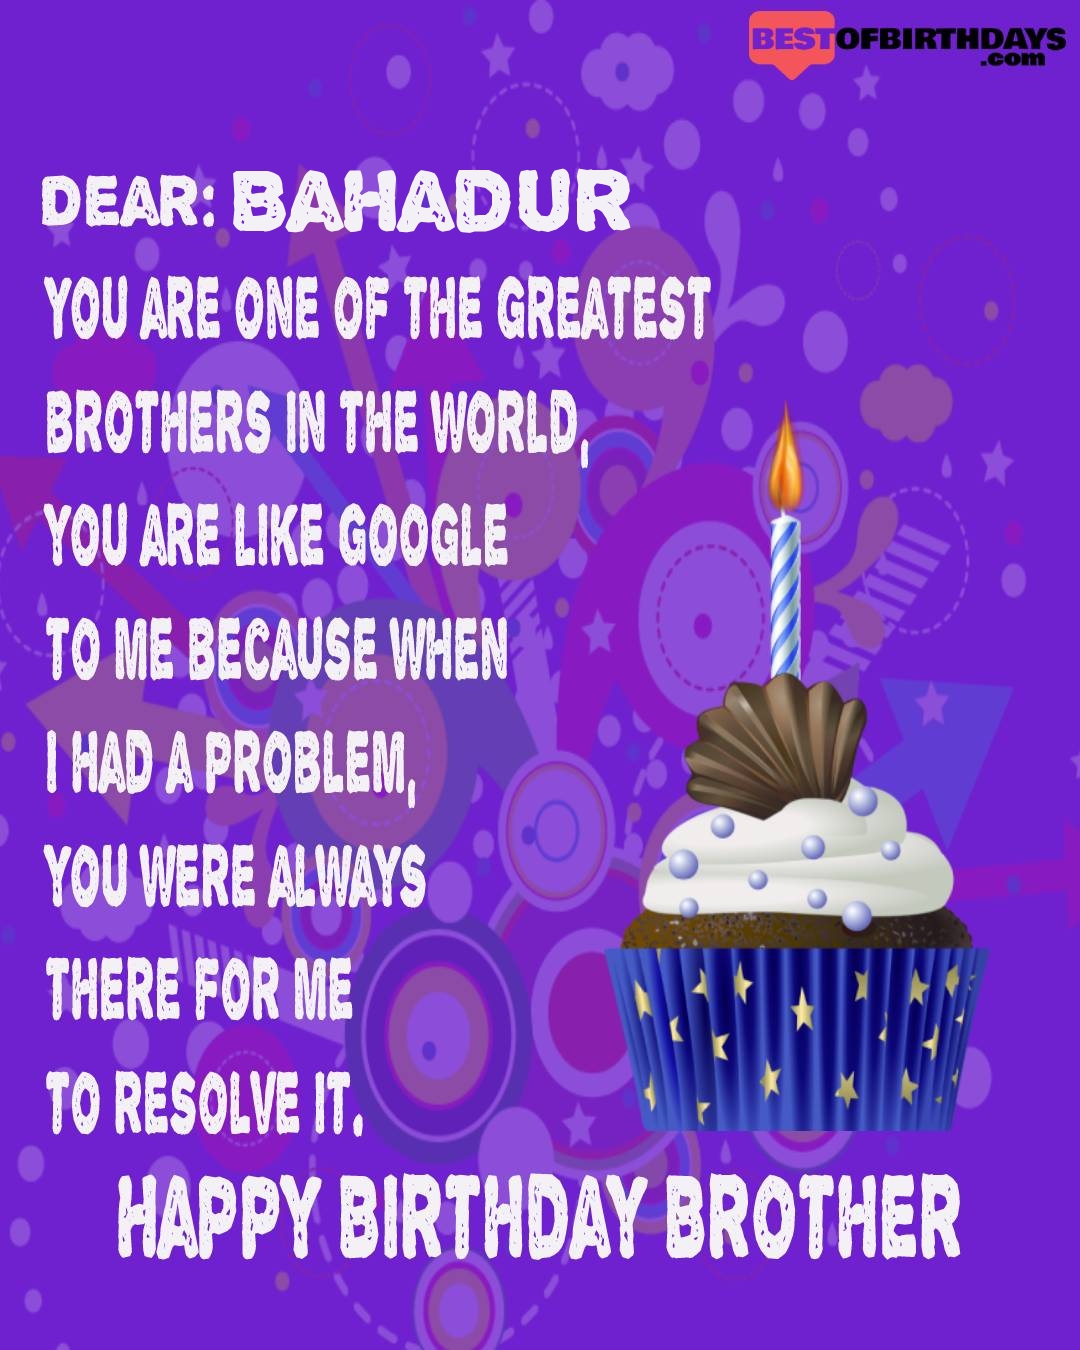 Happy birthday bahadur bhai brother bro